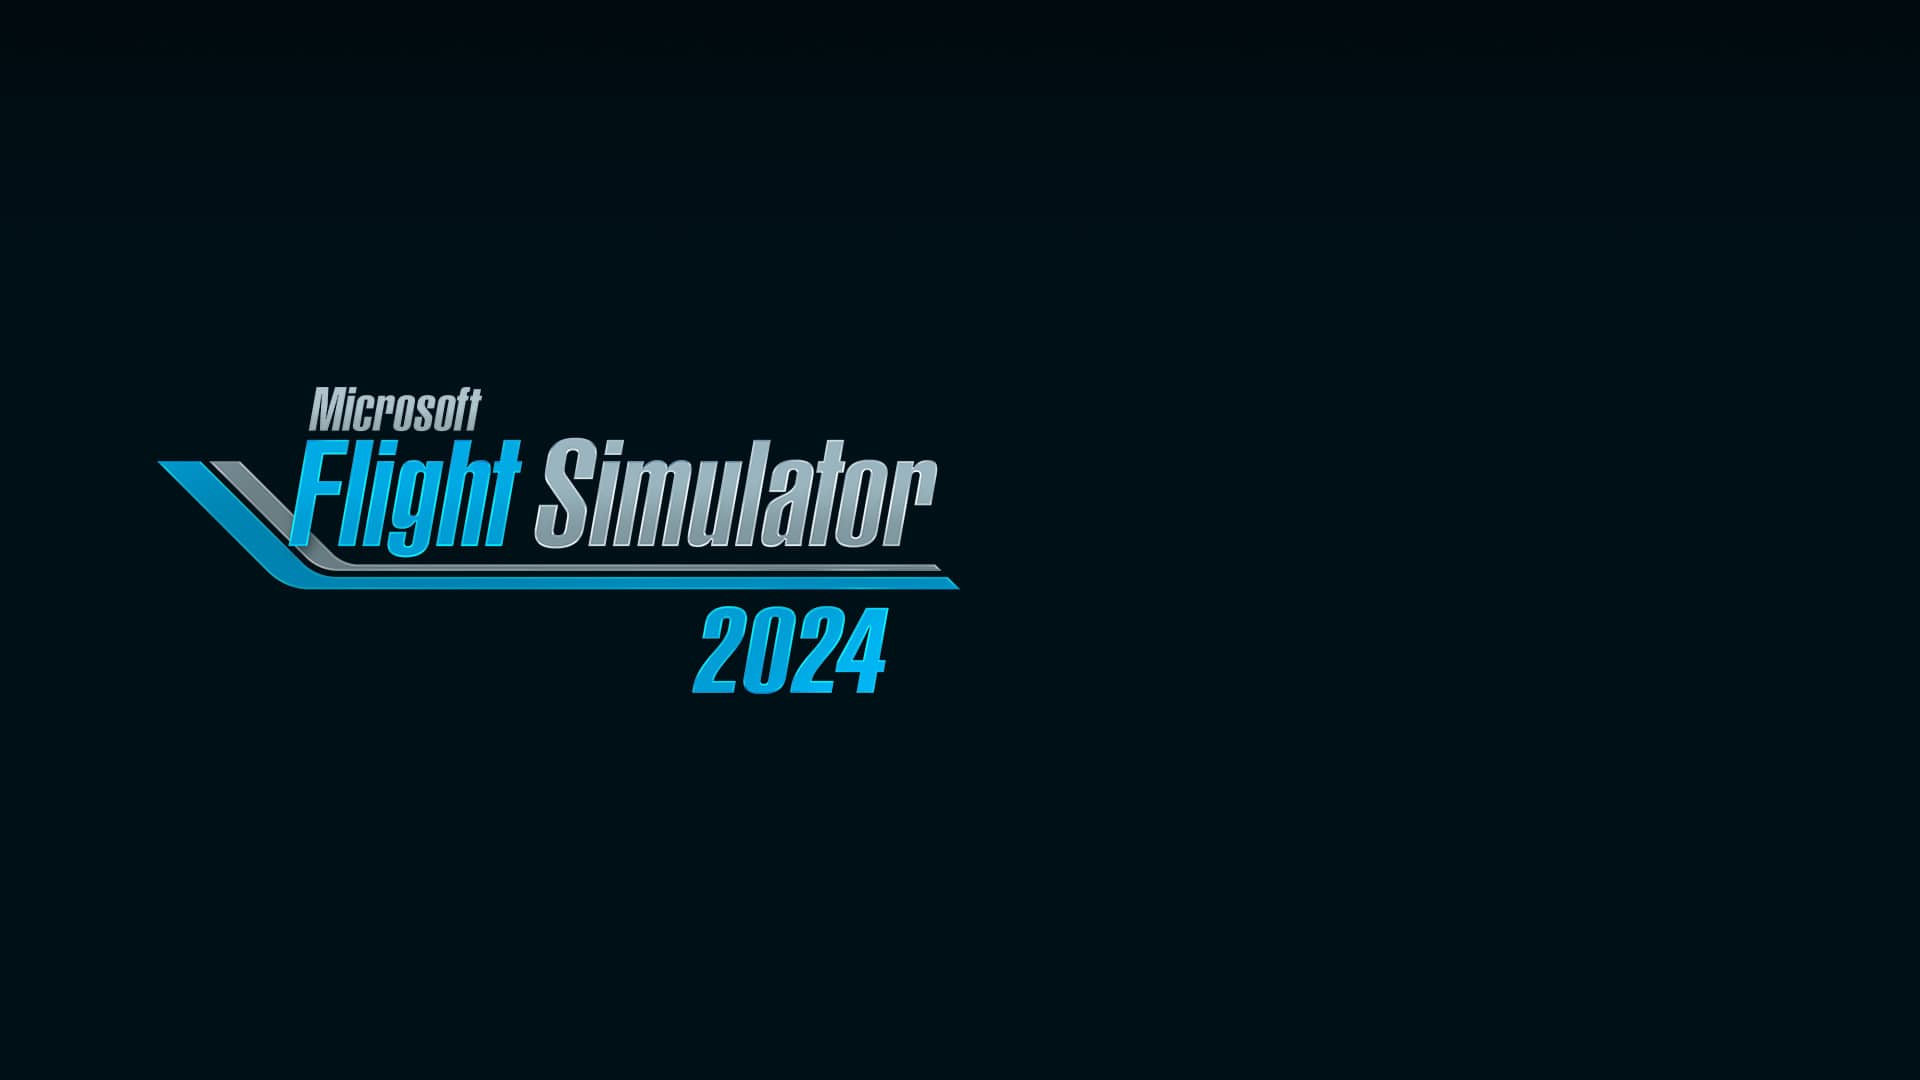 Microsoft Flight Simulator 2024 Rumors, Release Date, Everything We